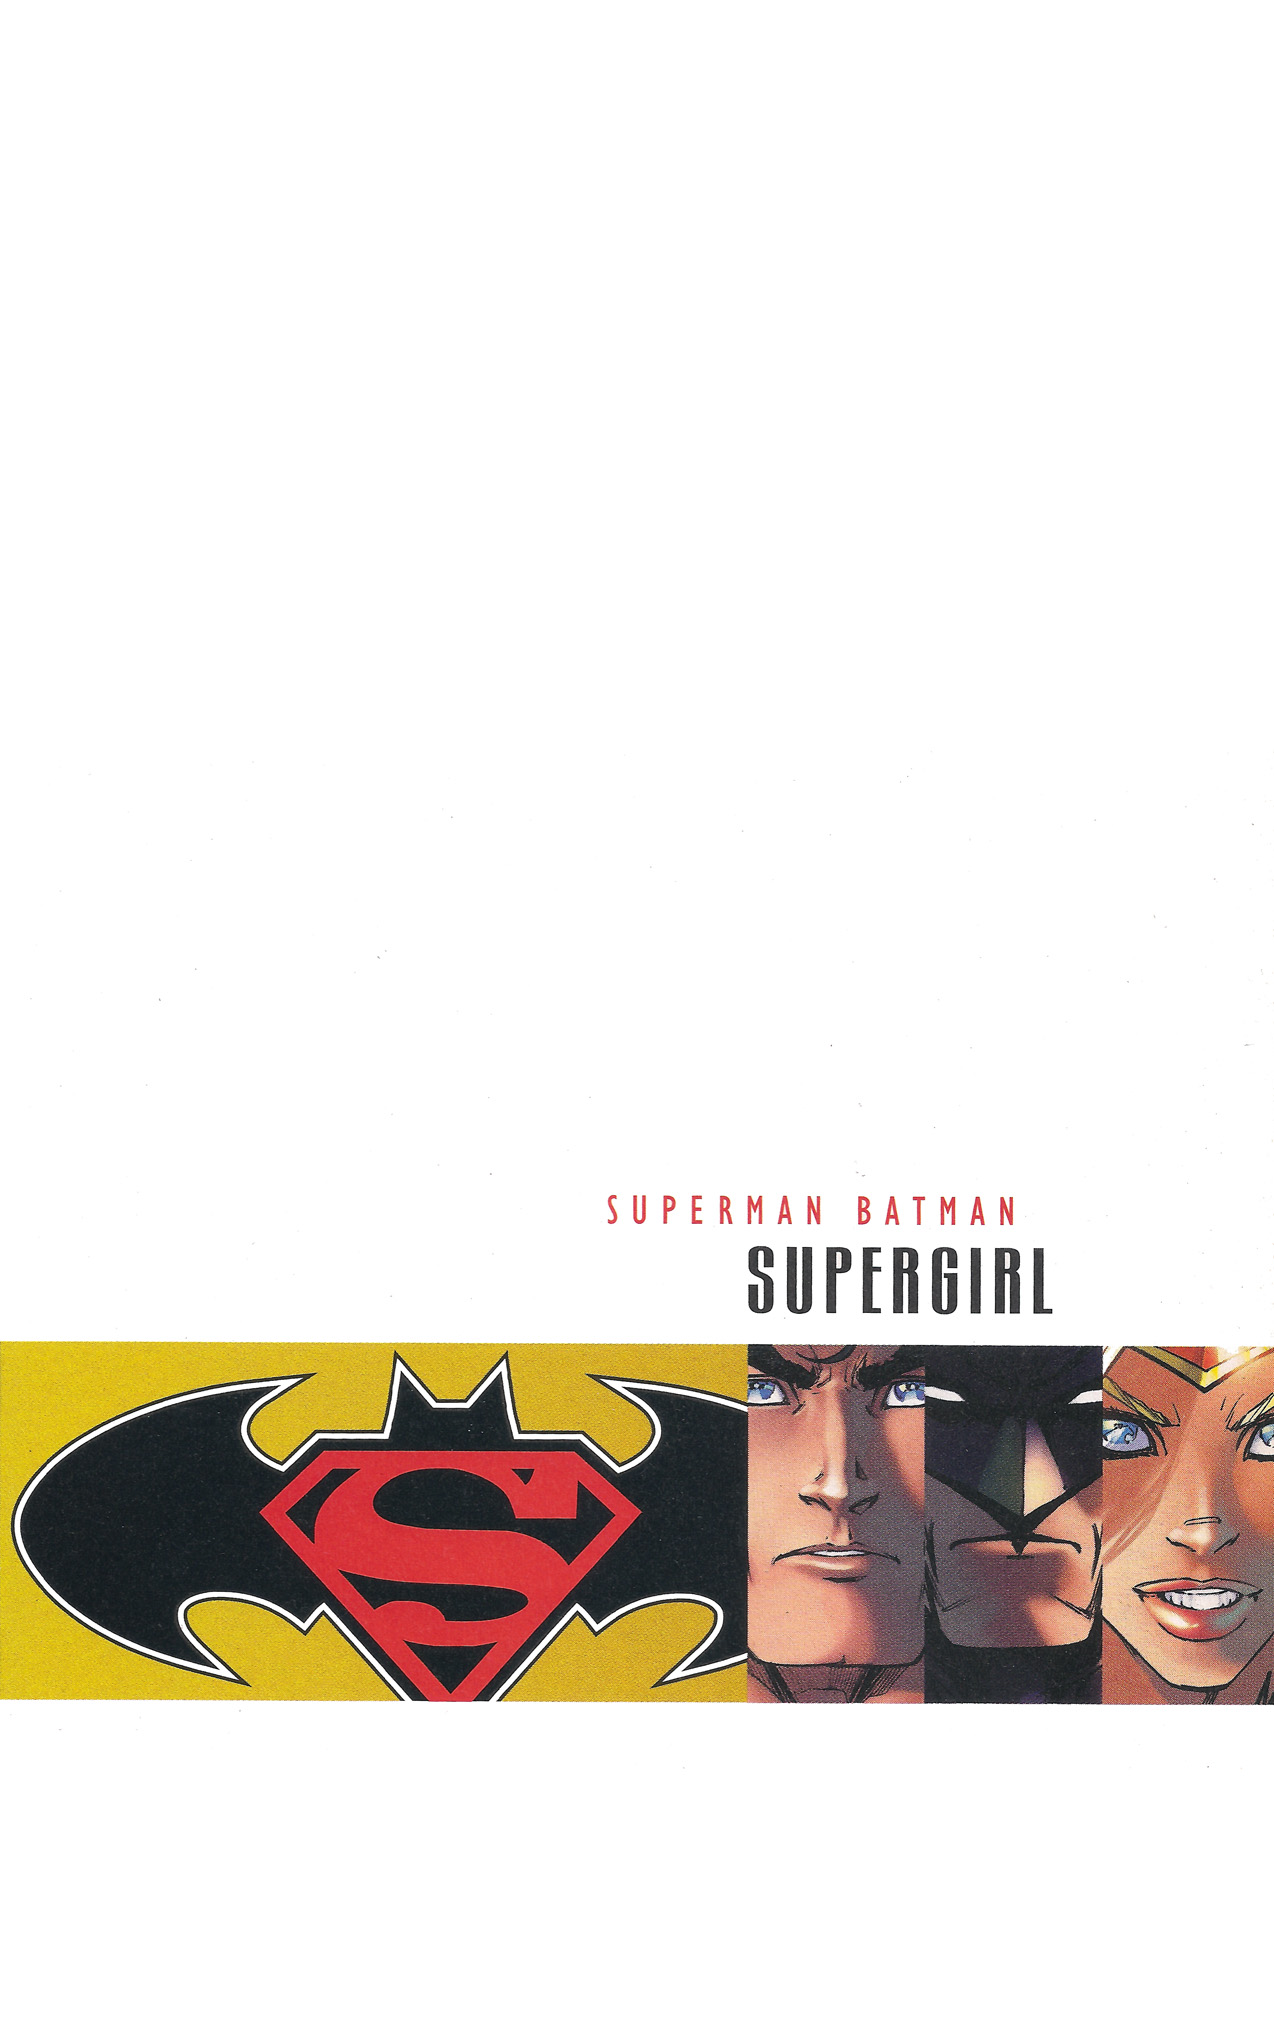 Read online Superman/Batman: Supergirl comic -  Issue # TPB - 2